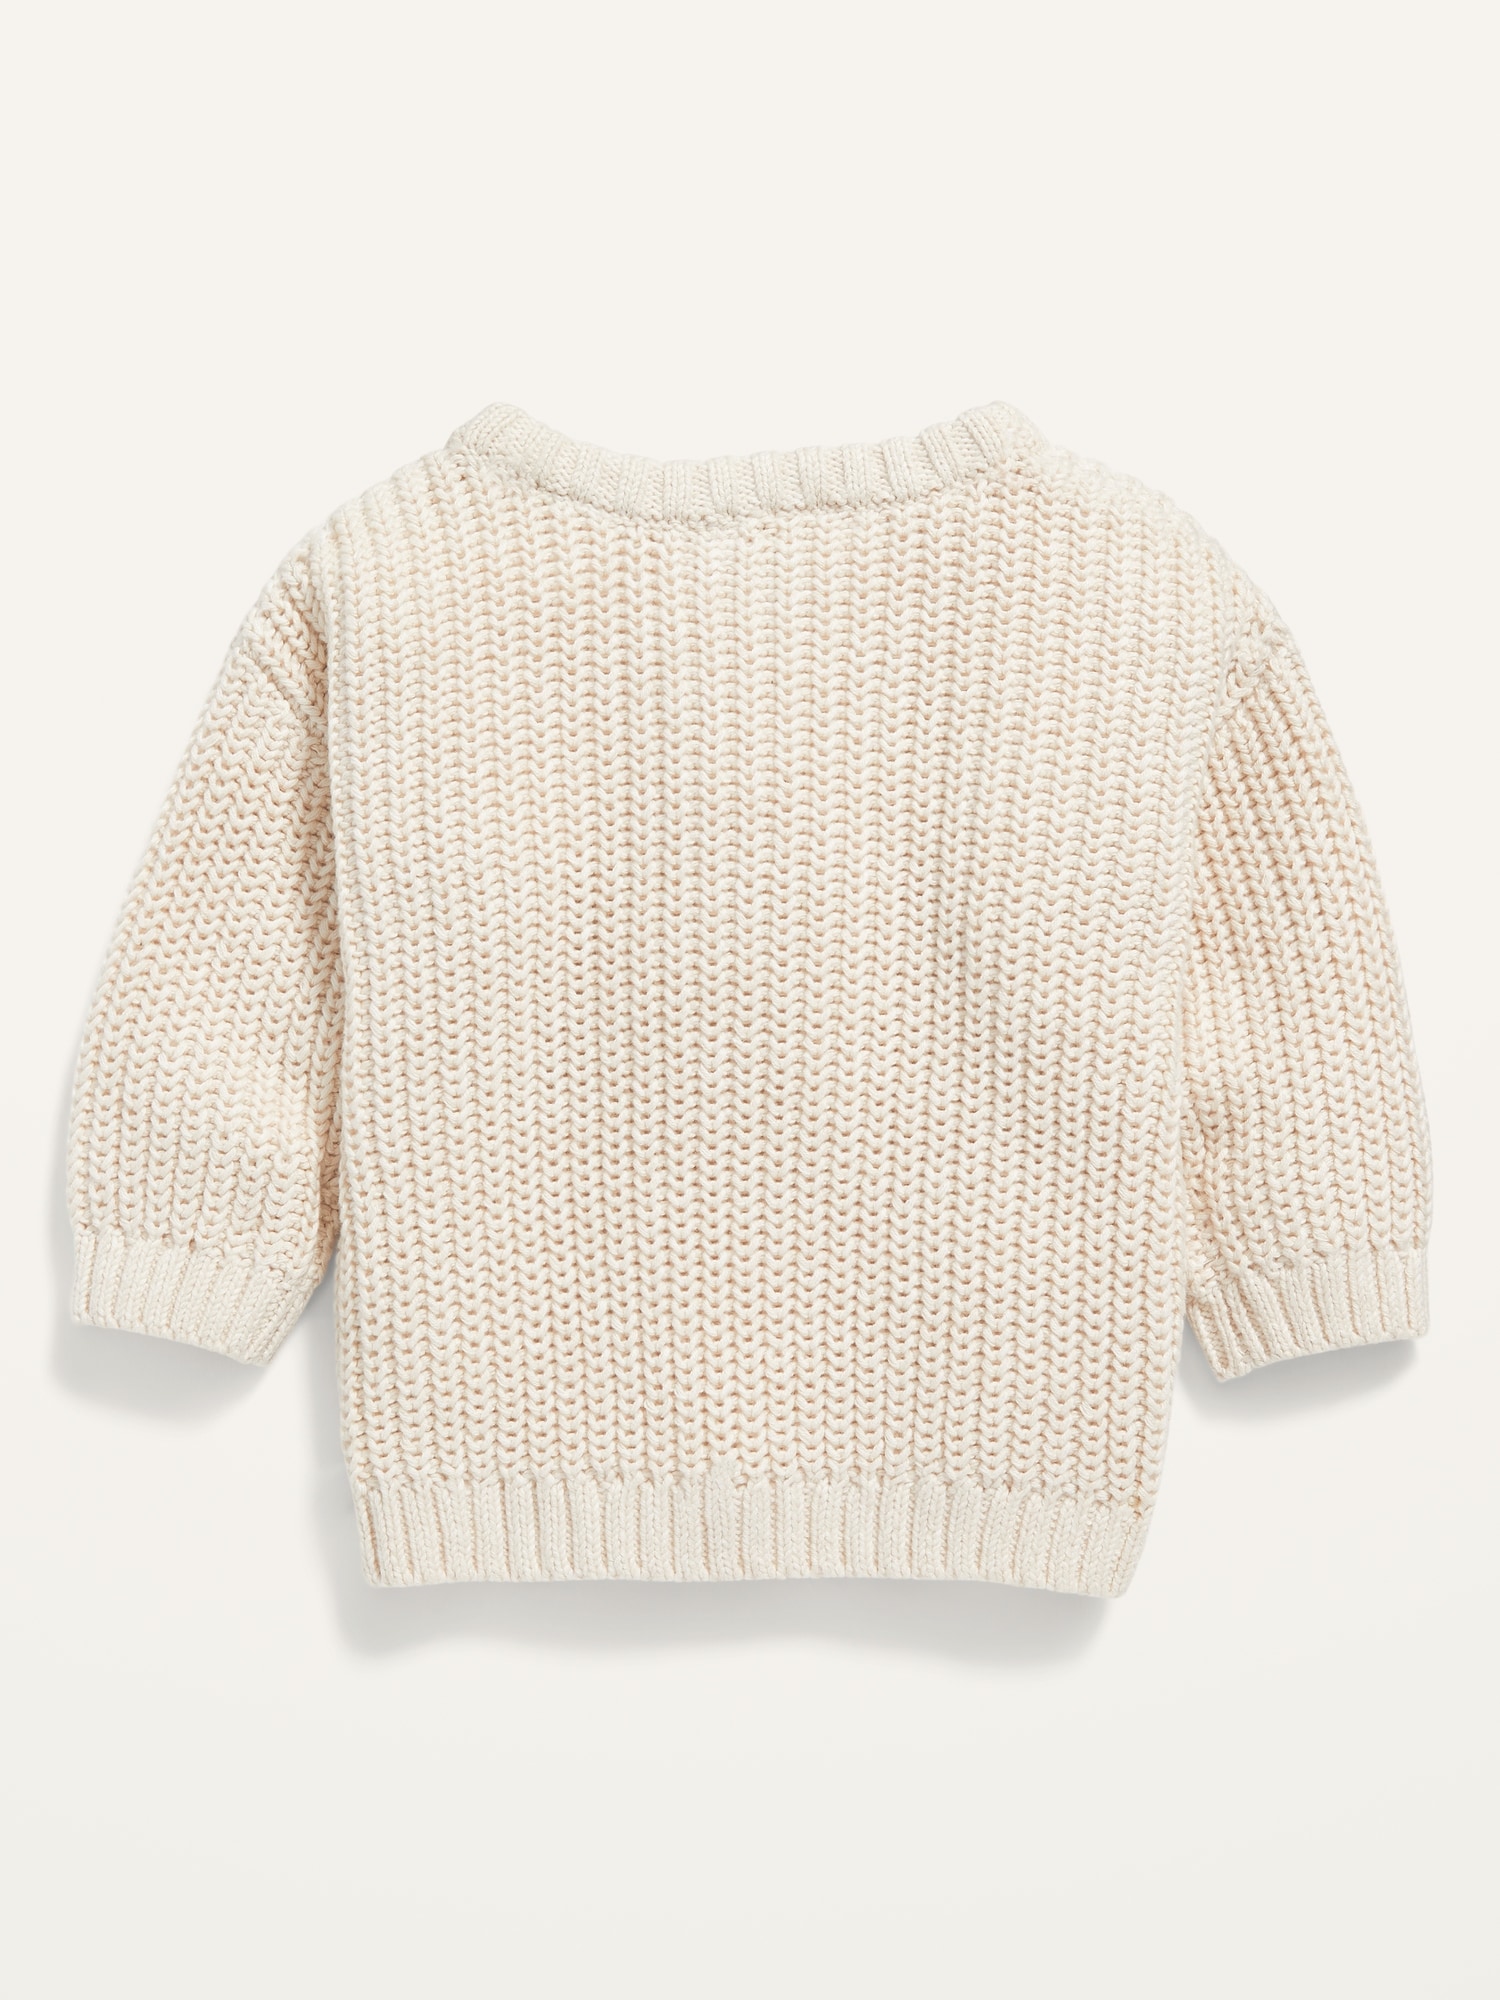 NWT Stitches & Stripes Vera Pullover Sweater Oat Combo Small blog.knak.jp